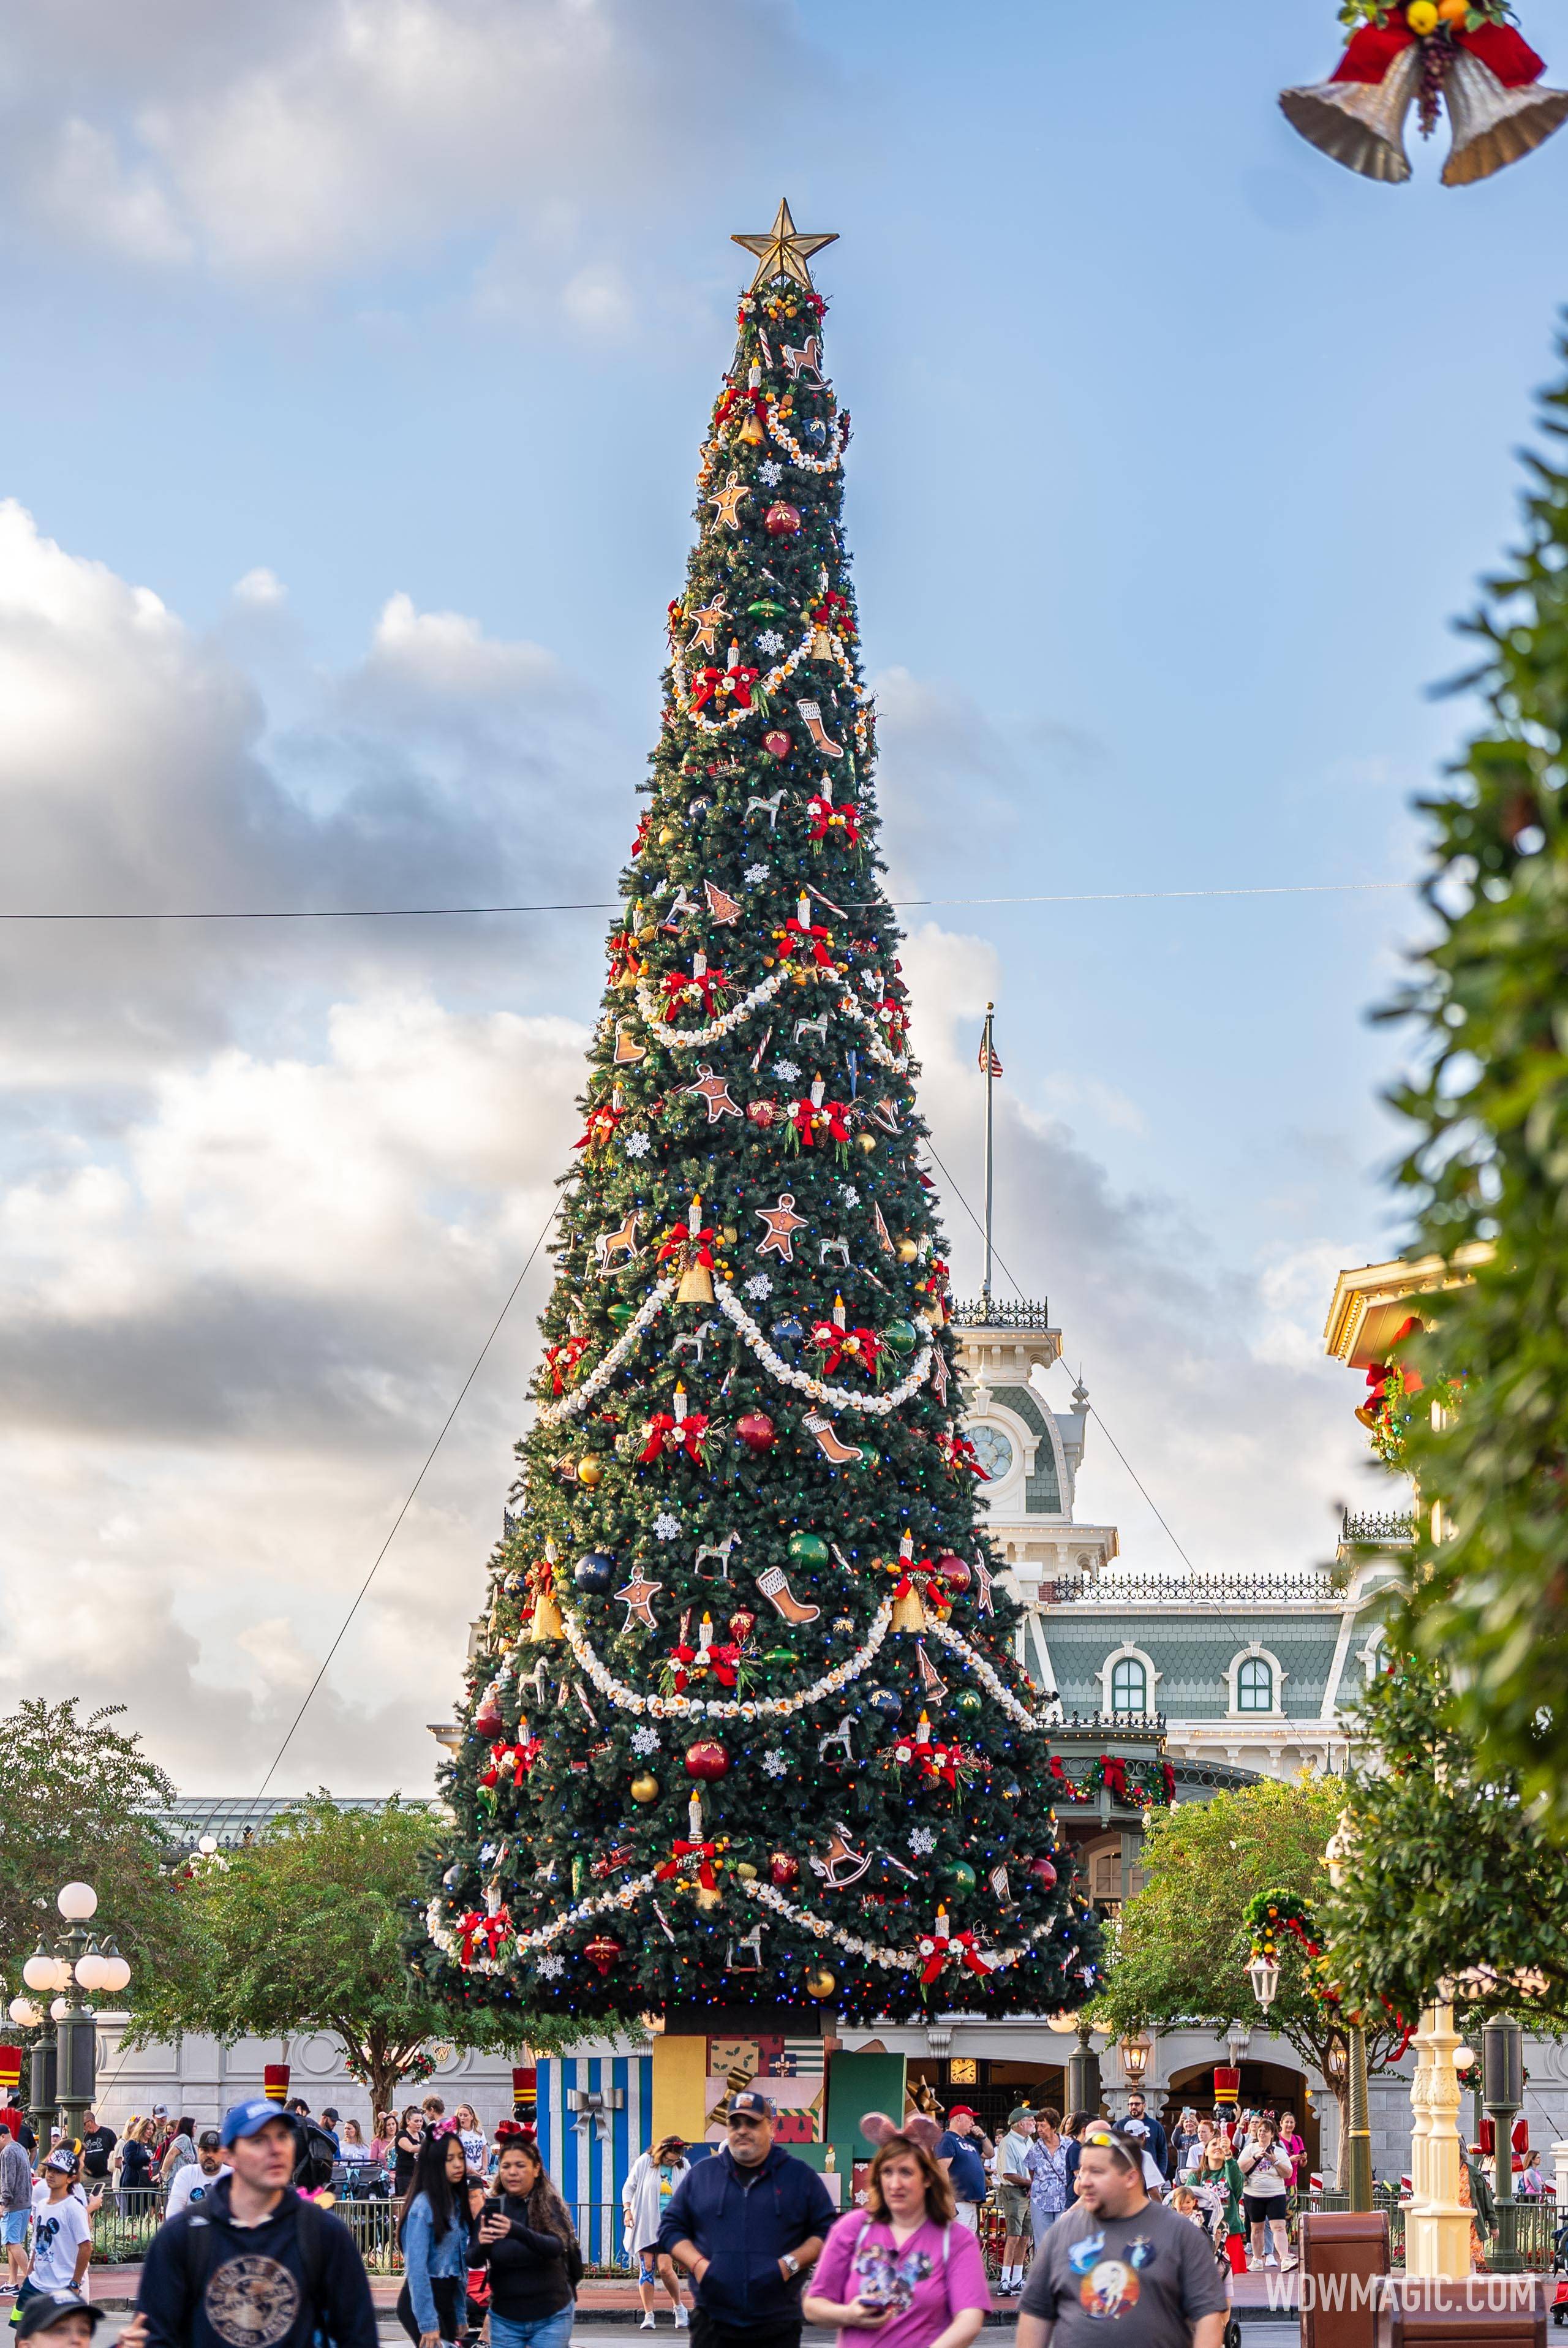 Magic Kingdom Christmas Tree and holiday decorations